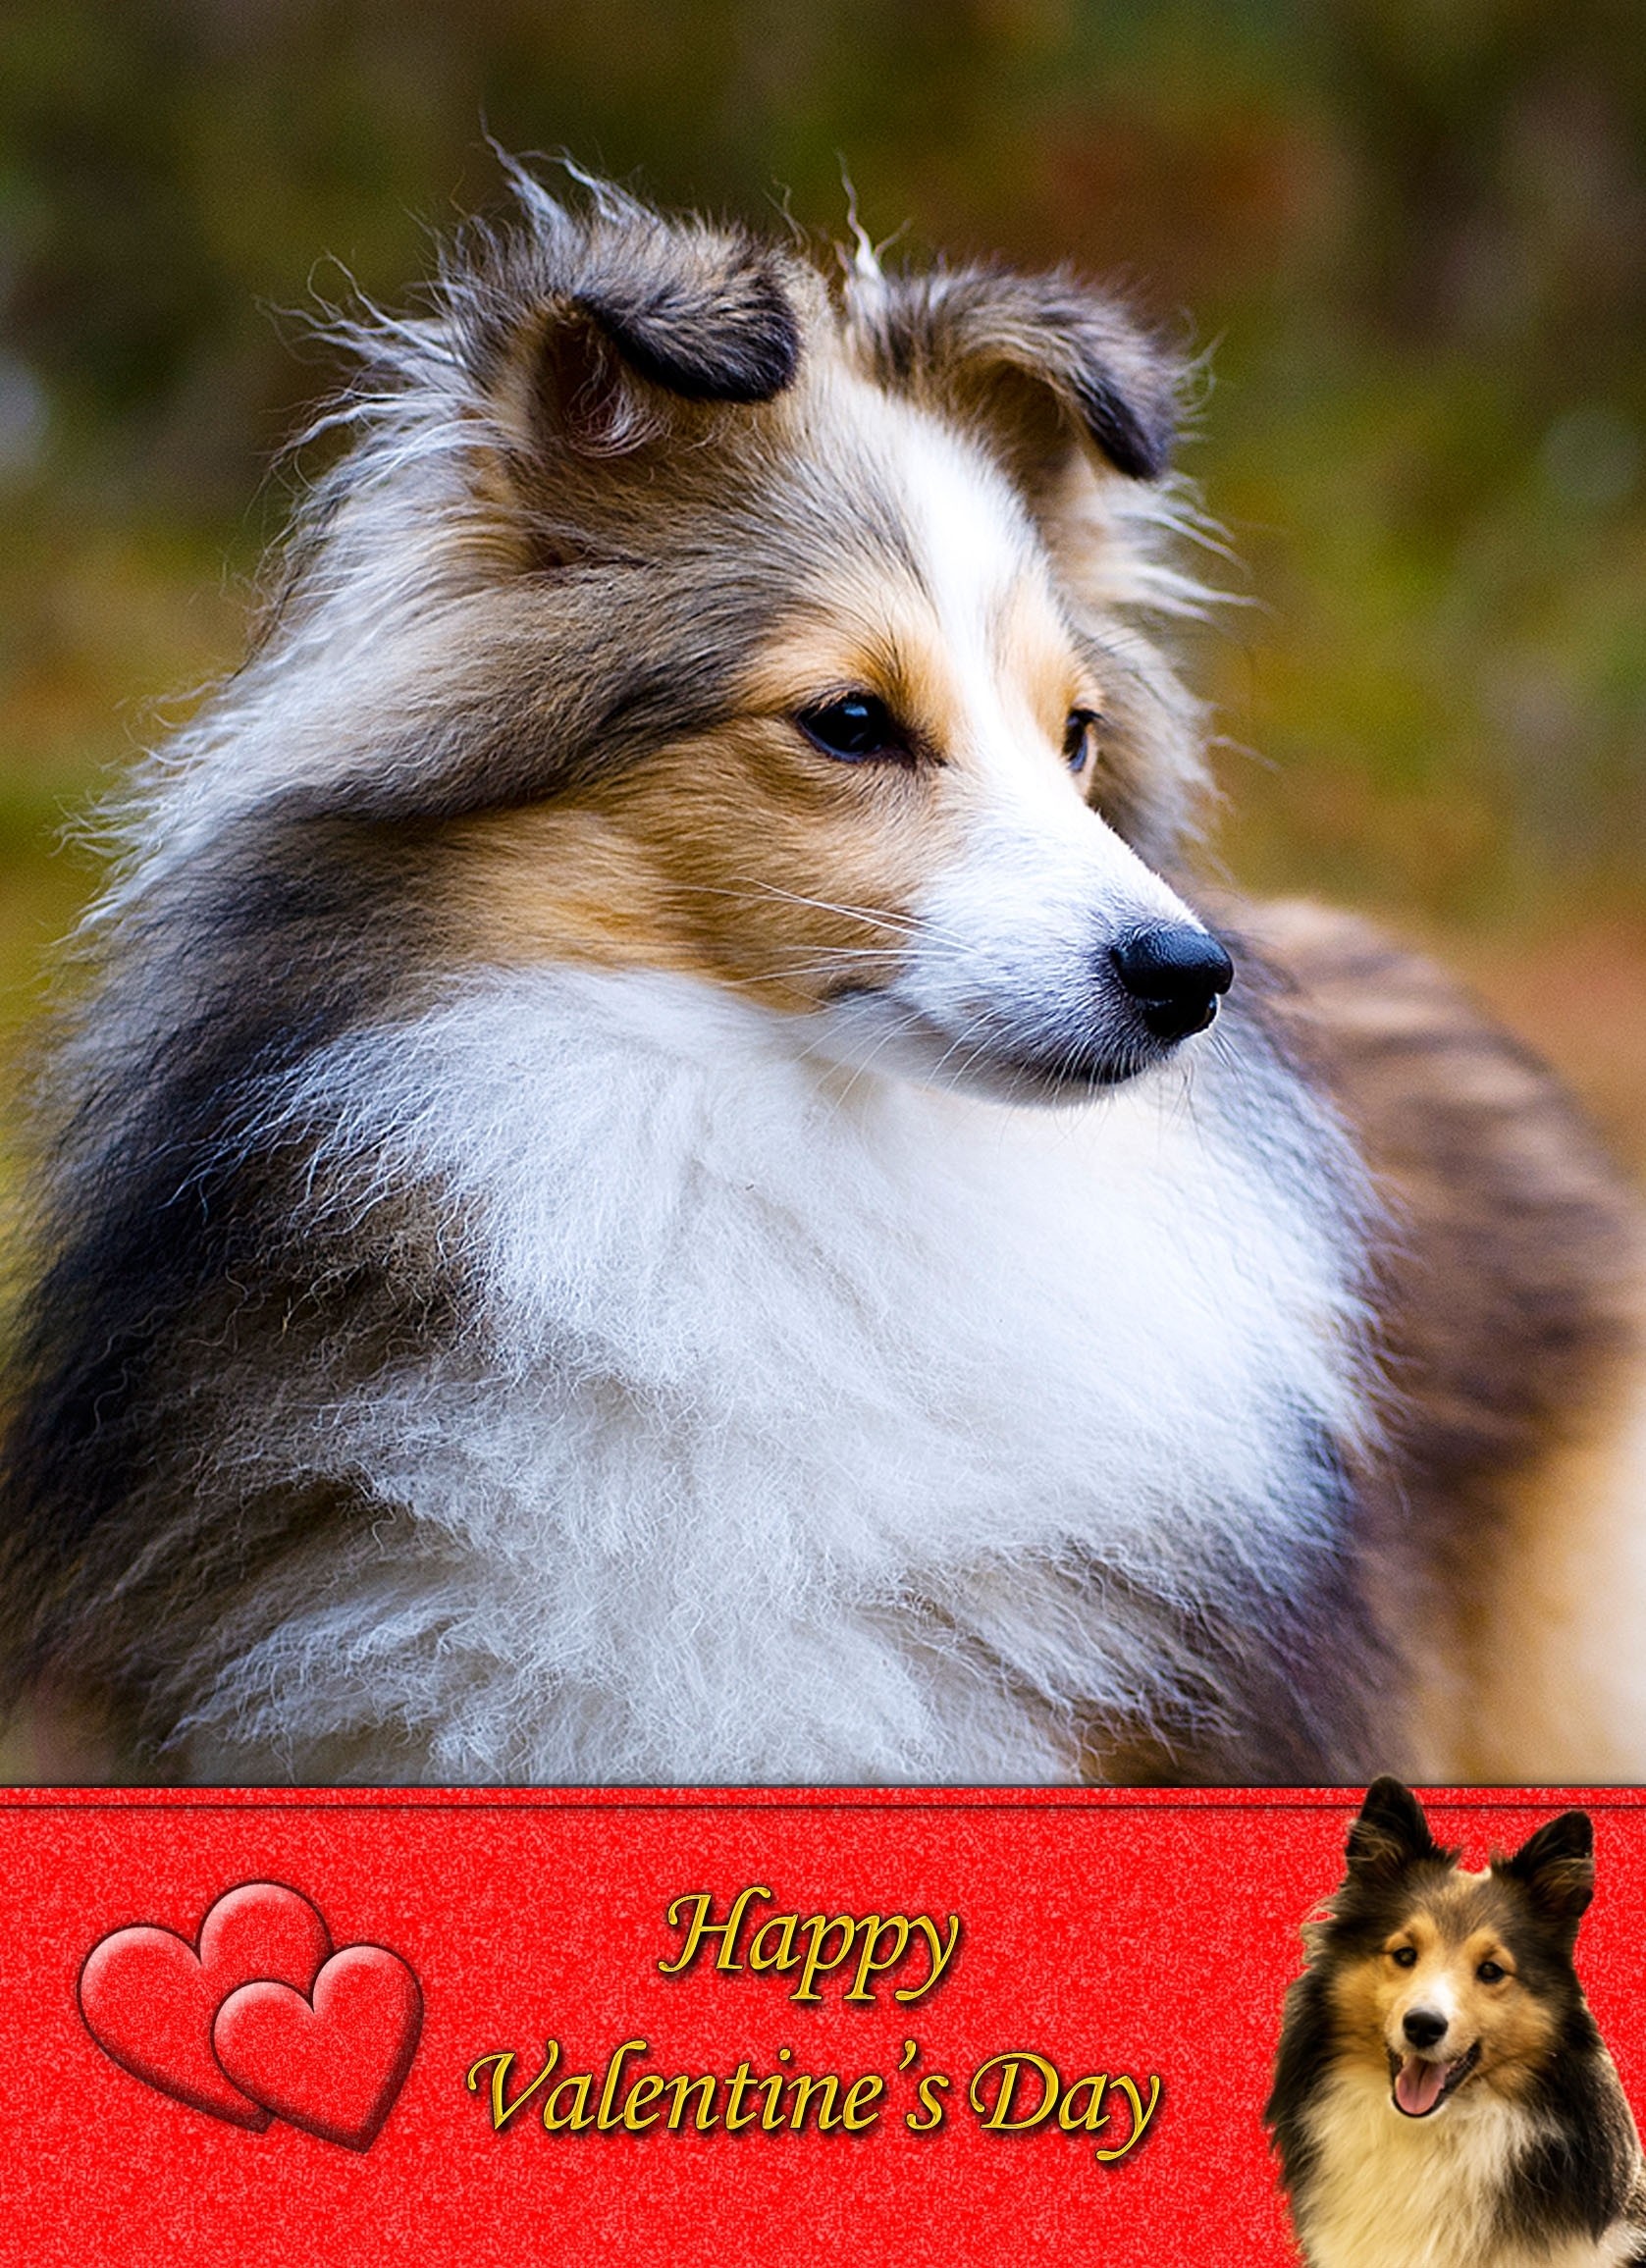 Shetland Sheepdog Valentine's Day Card